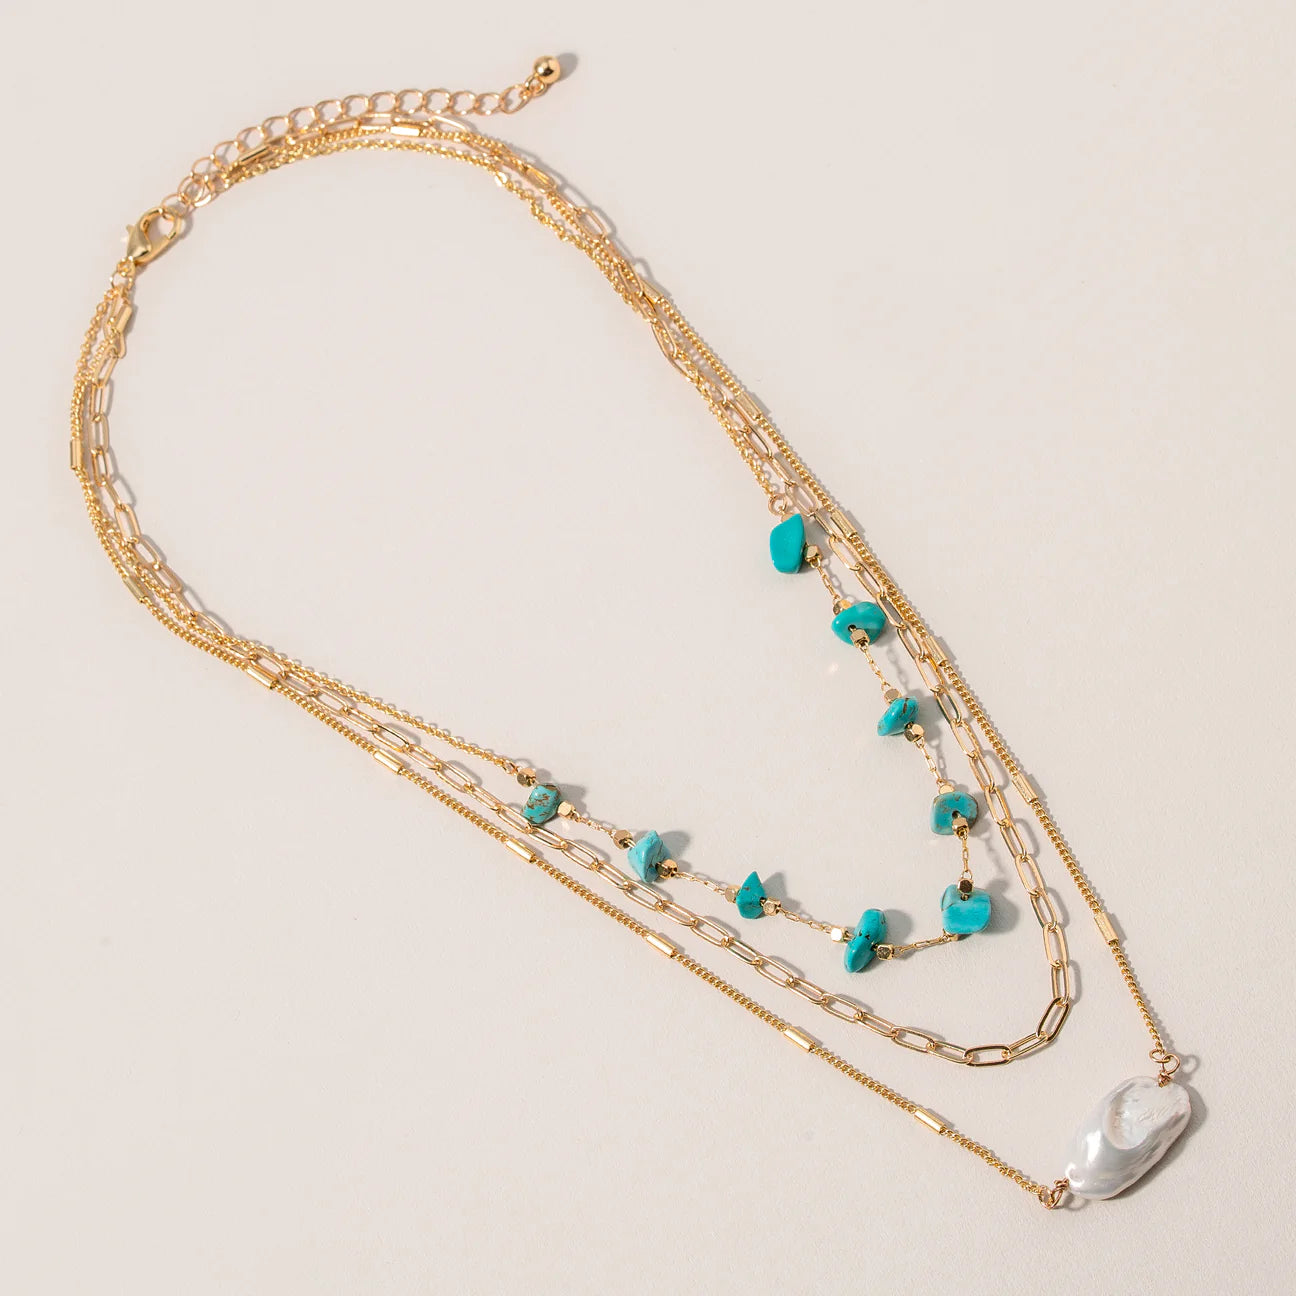 ‘LOTTIE’ Necklace - Turquoise